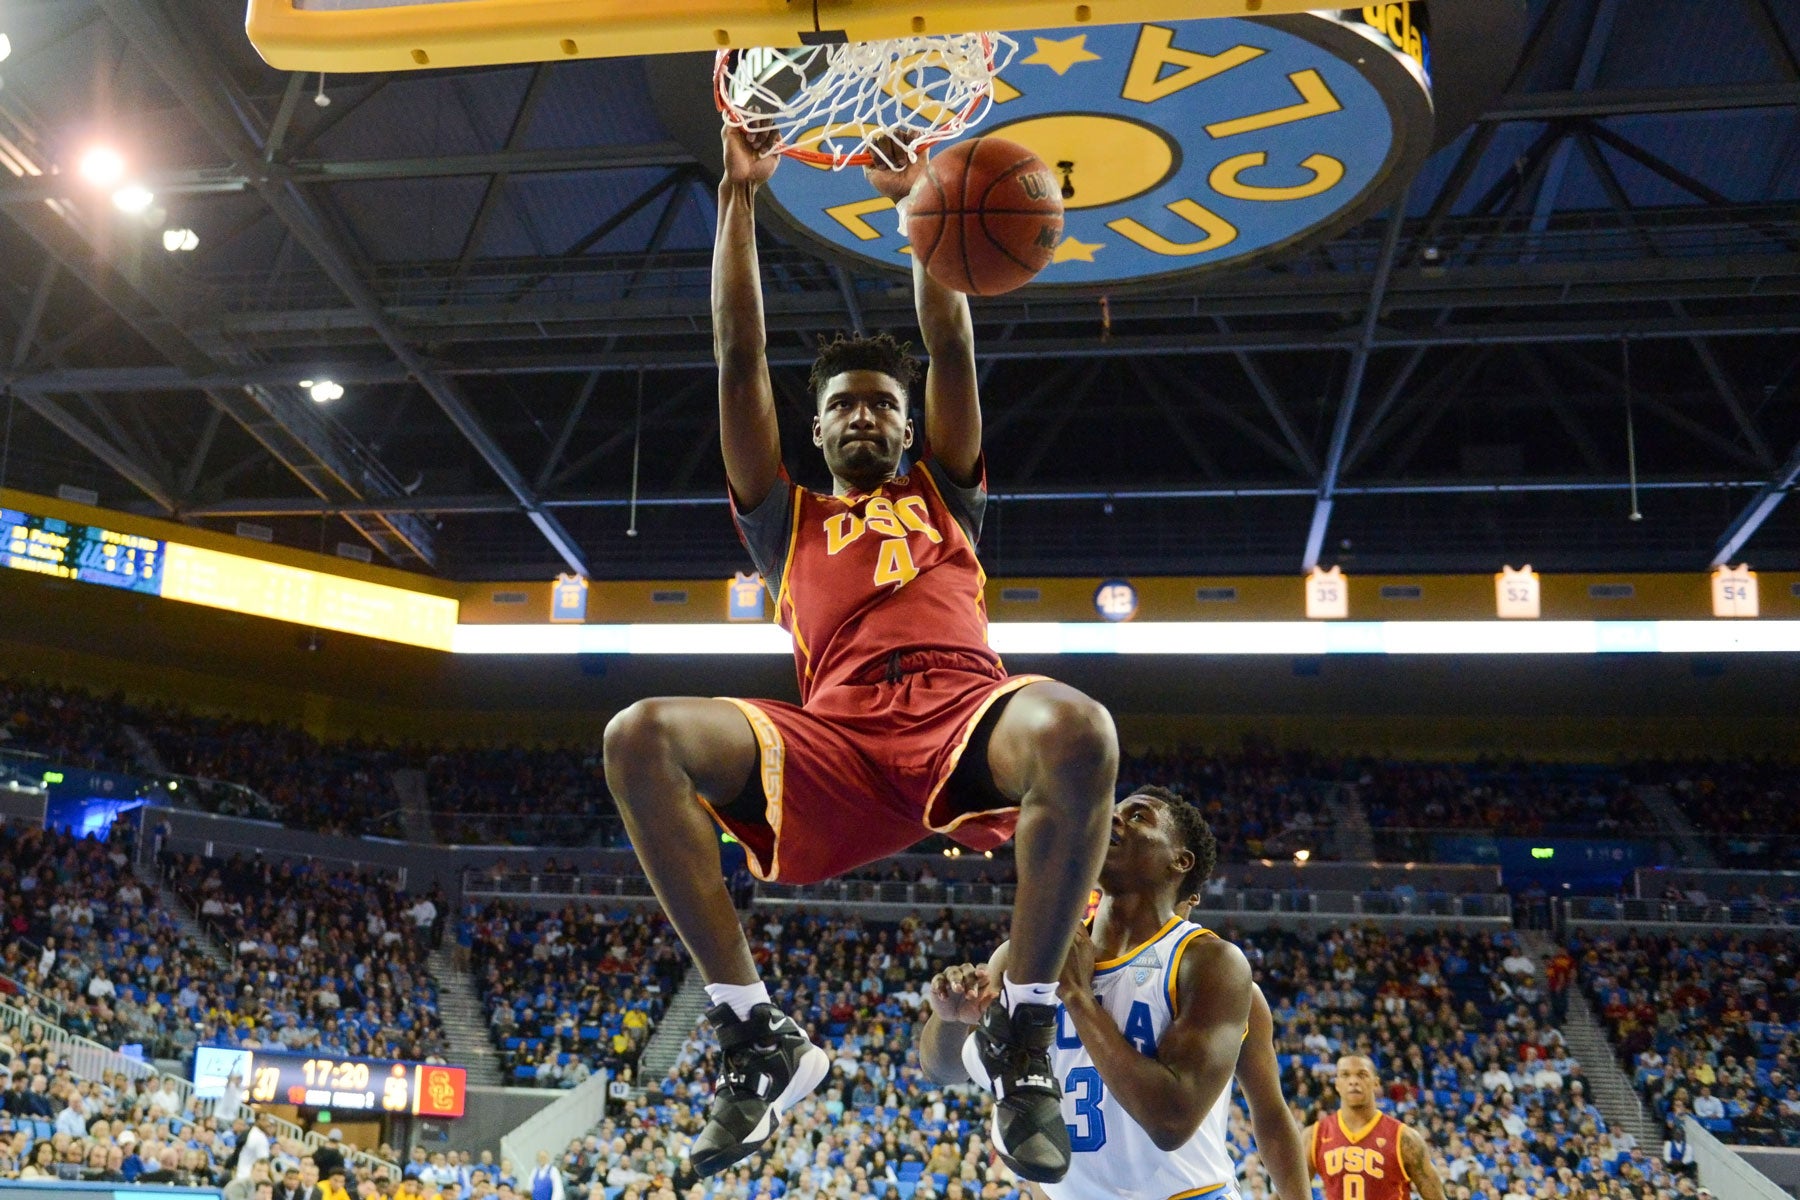 USC basketball player dunking